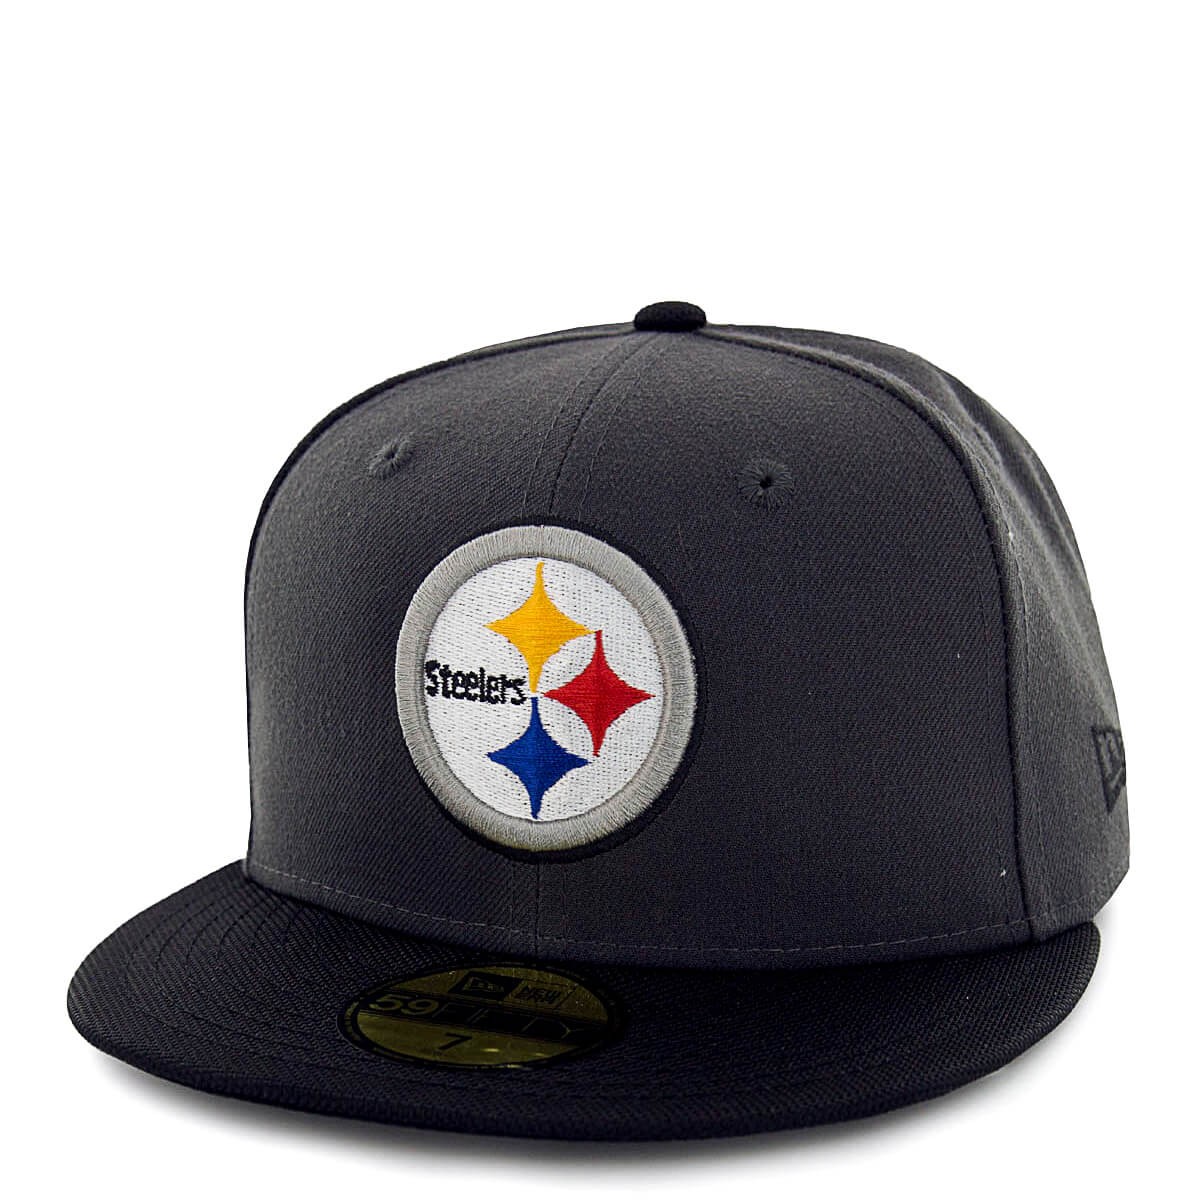 New Era Cap 59Fifty Steelers Grey Black